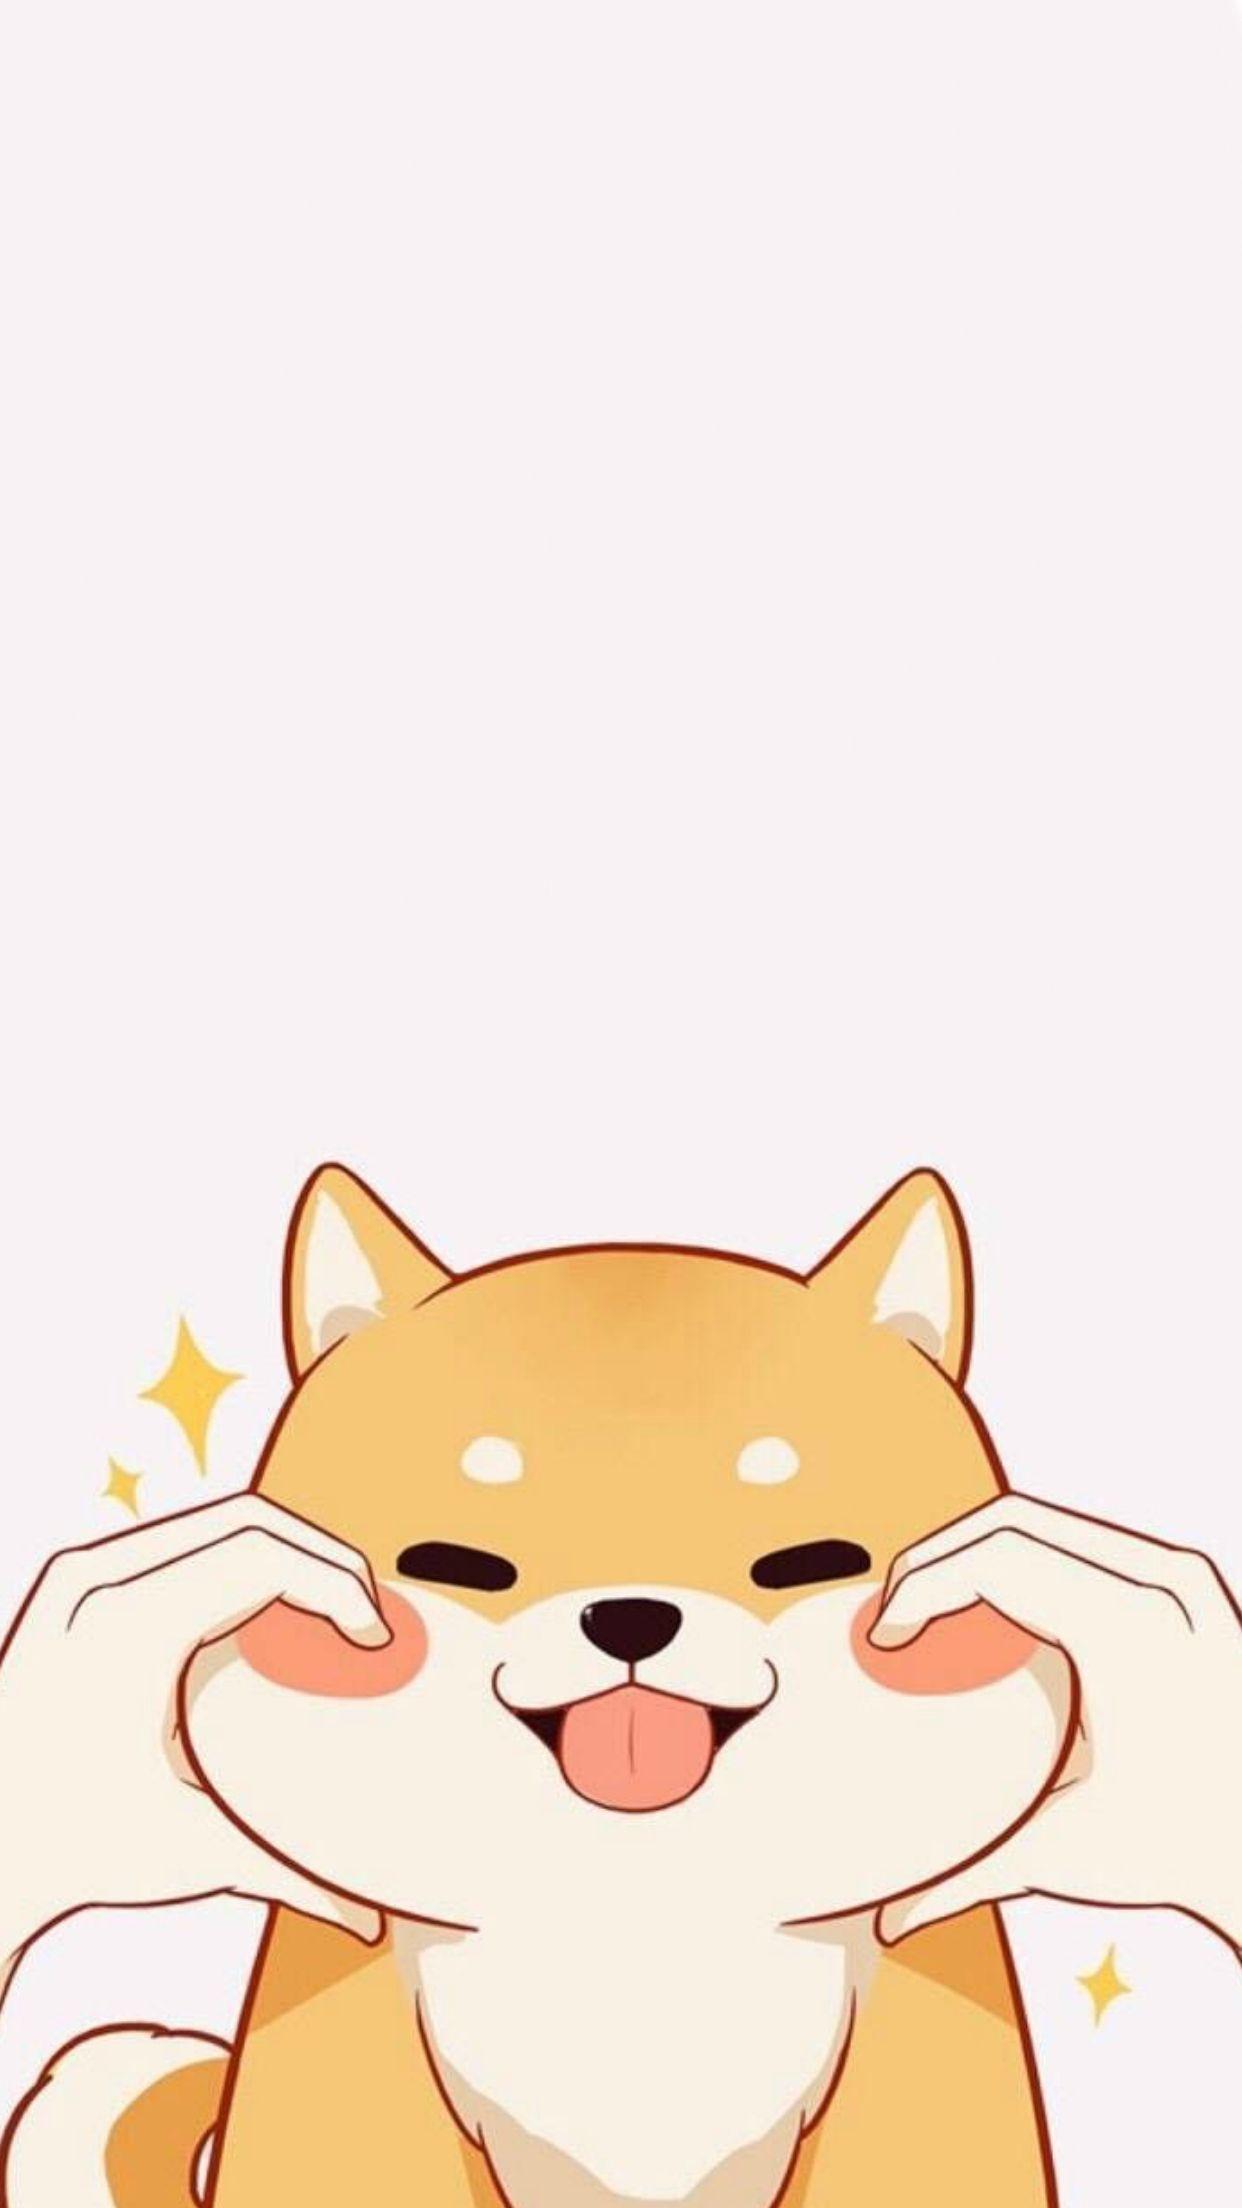 Sweet little cute kawaii anime cartoon puppy dog Vector Image